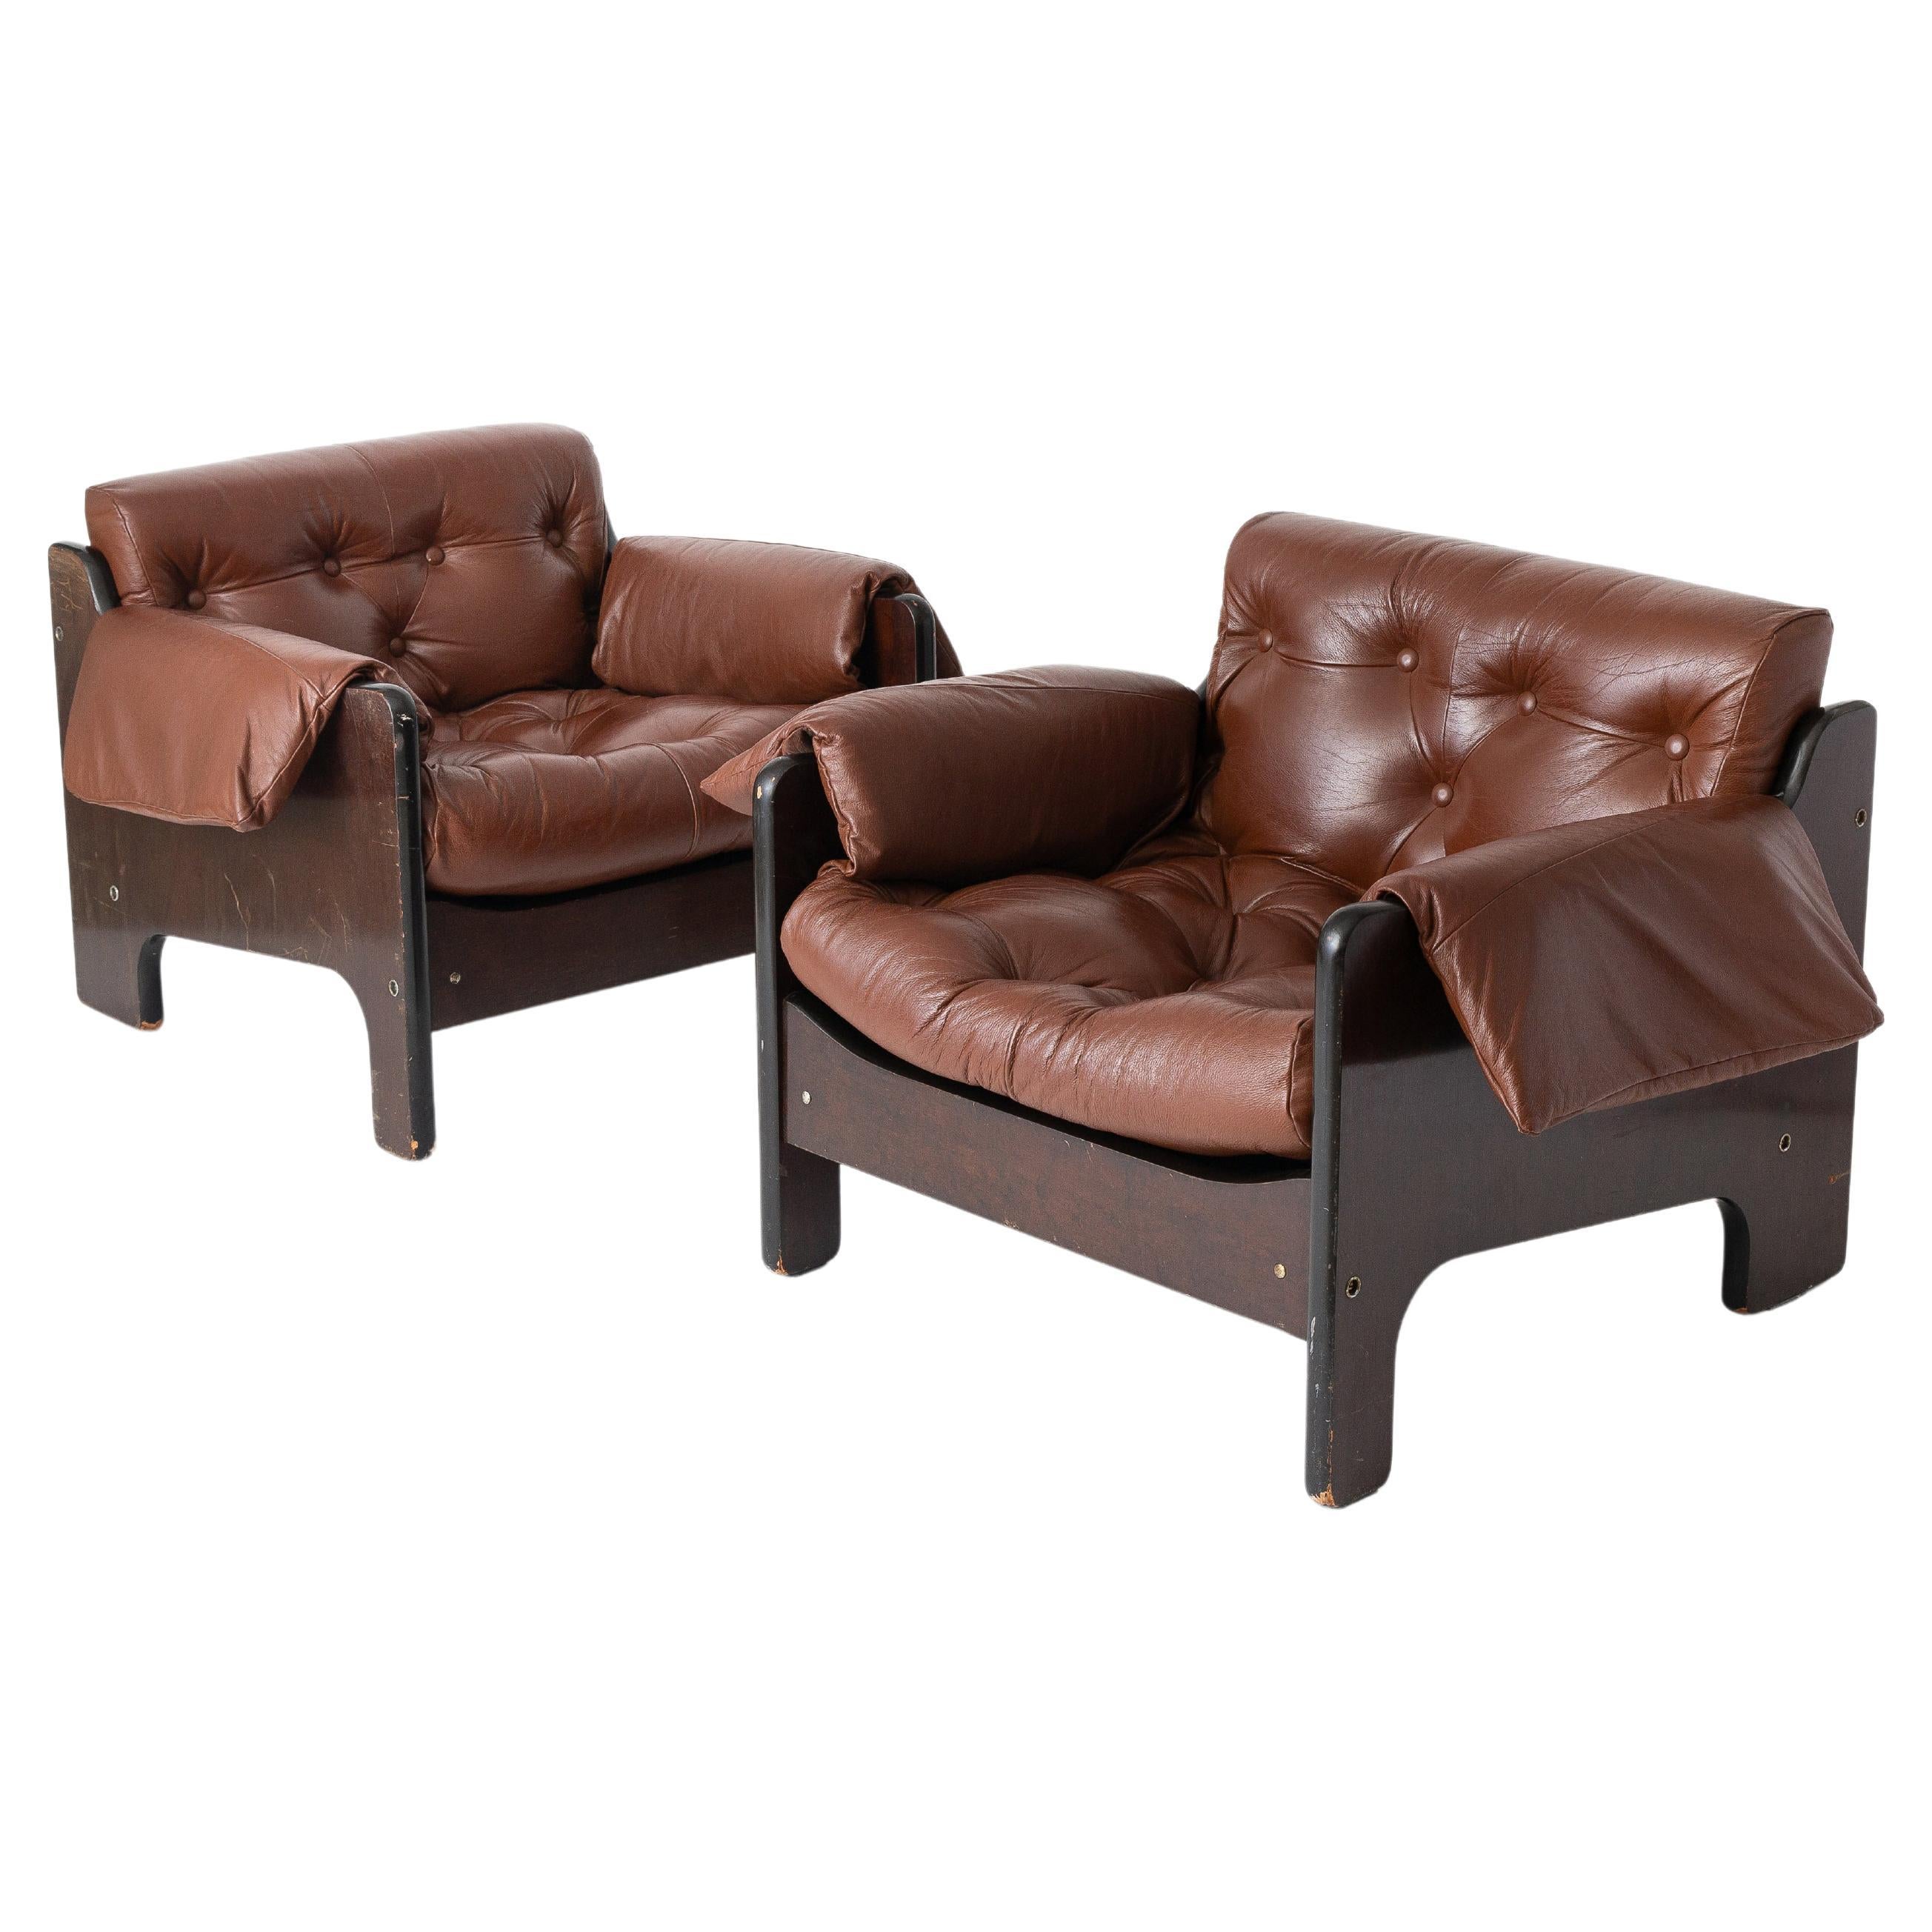 Geraldo De Barros leather armchairs